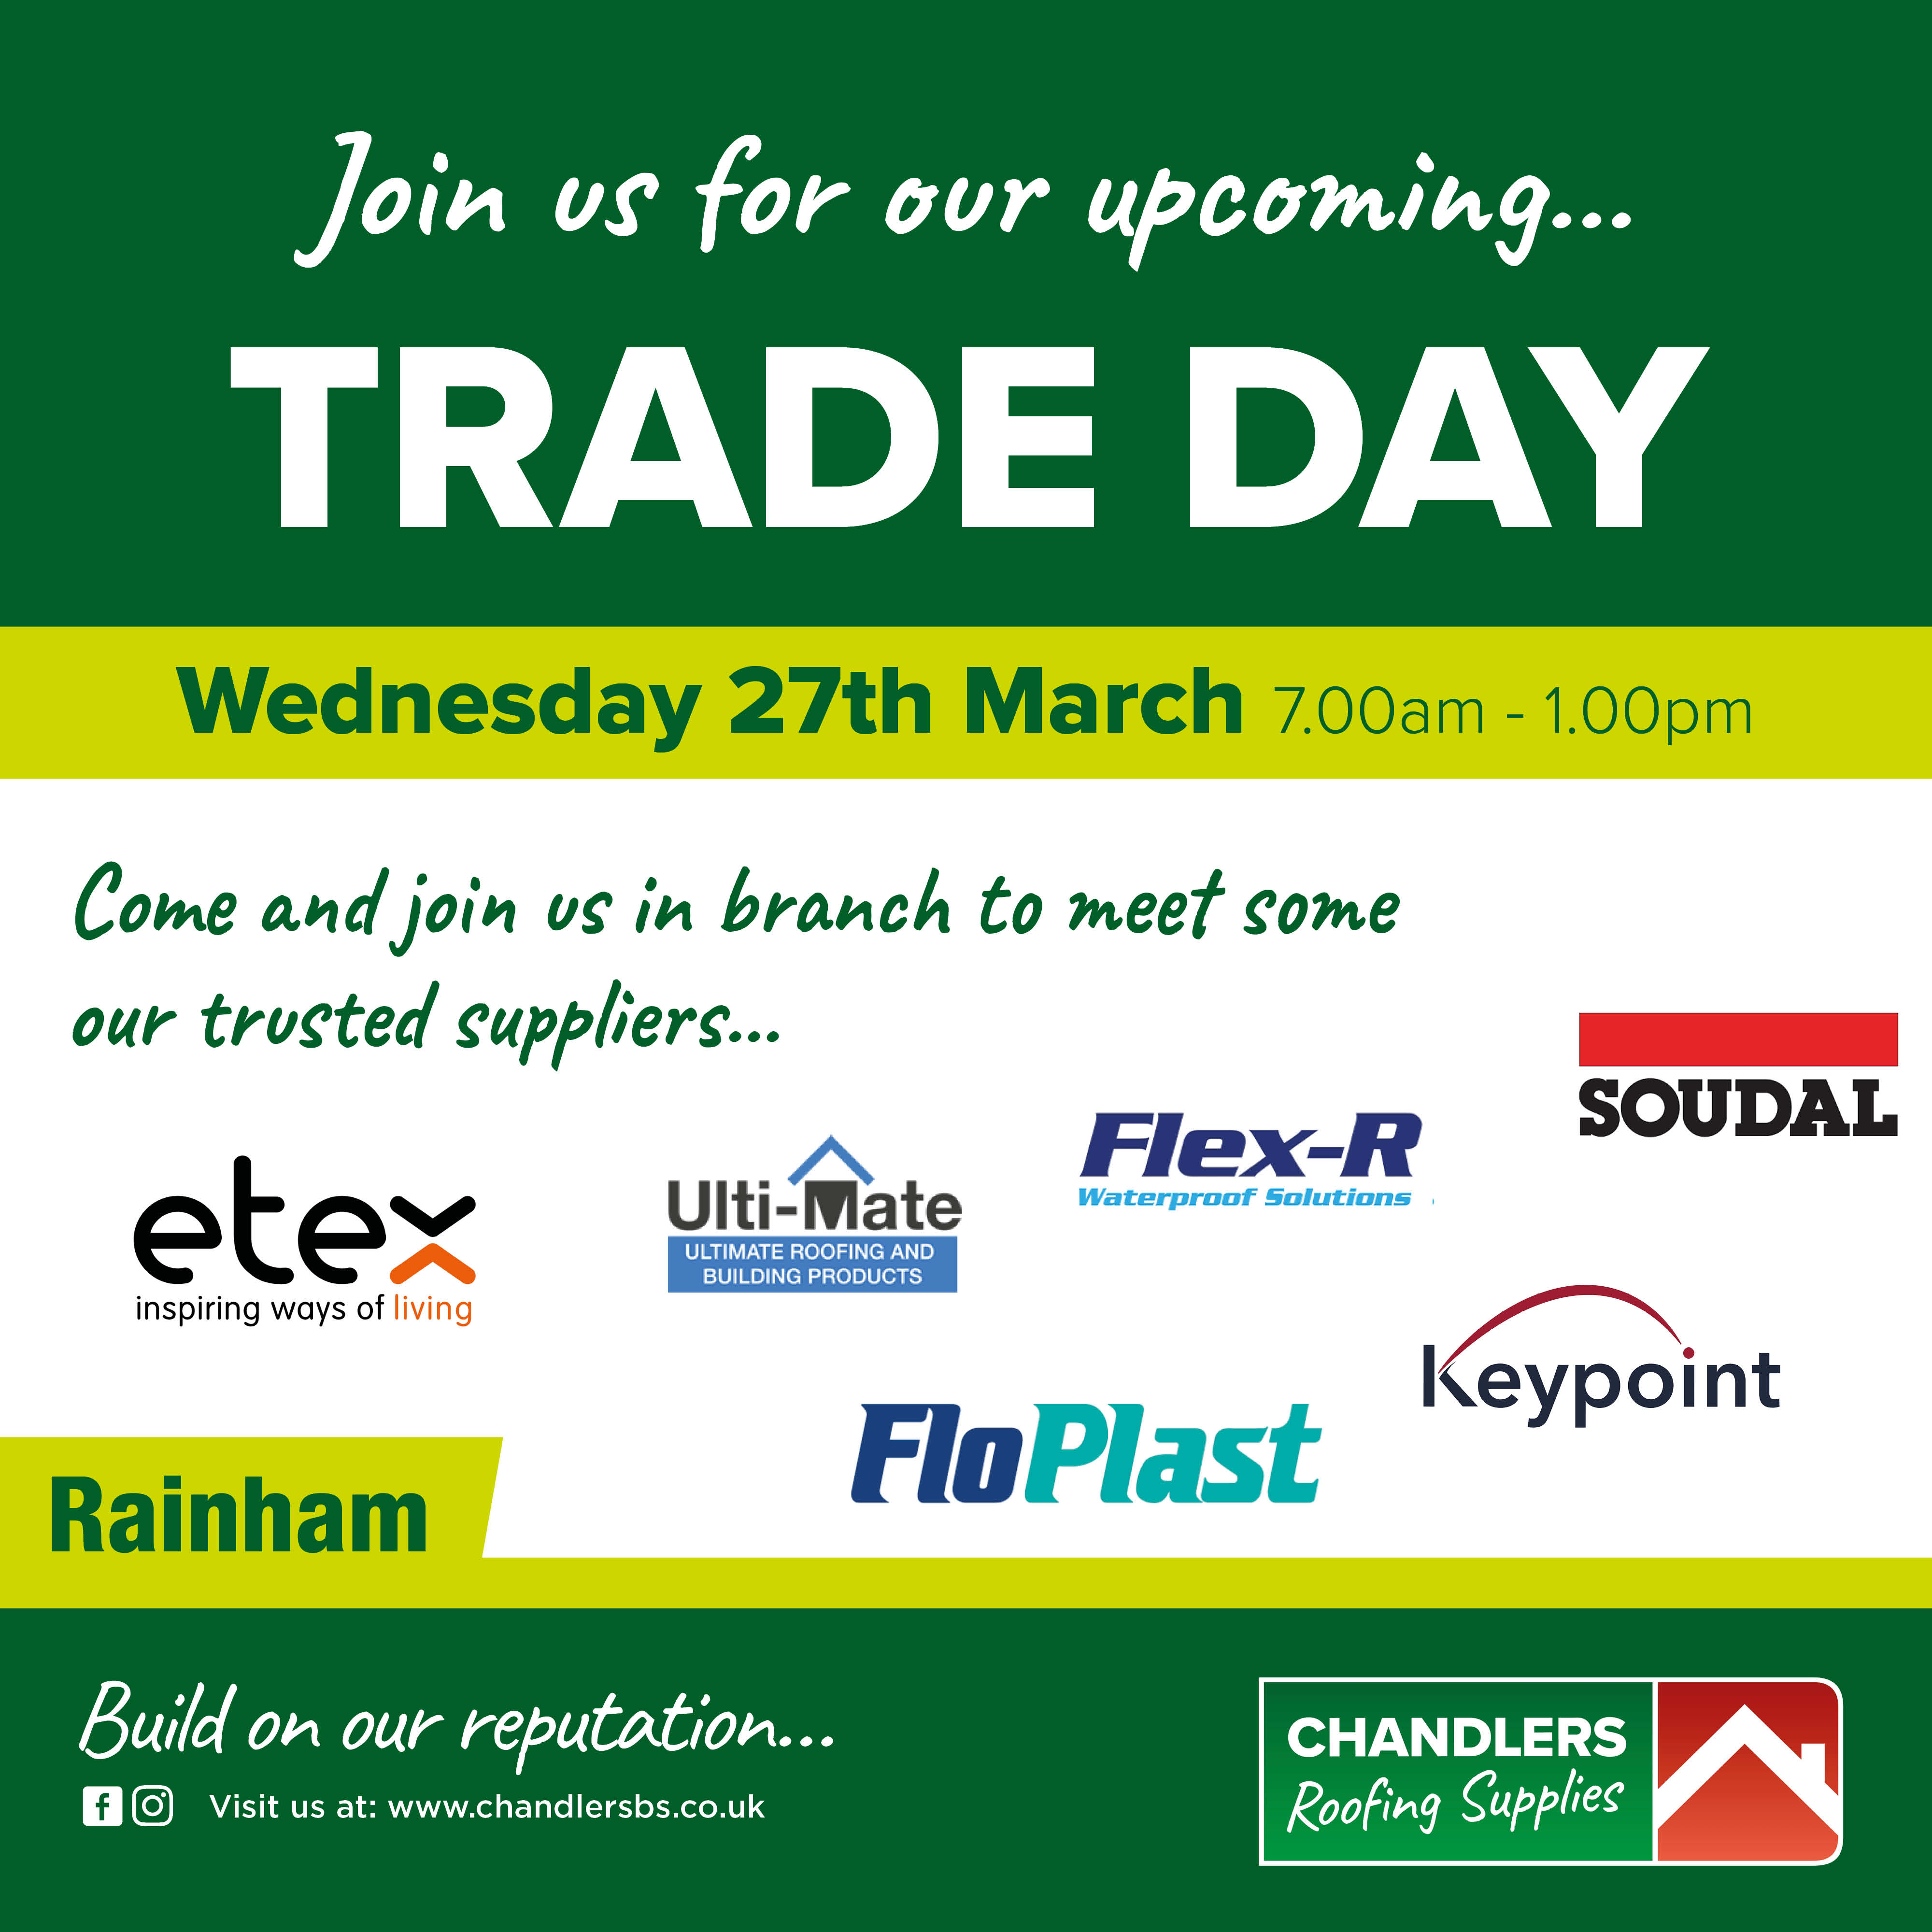 Rainham Trade Day 27th March